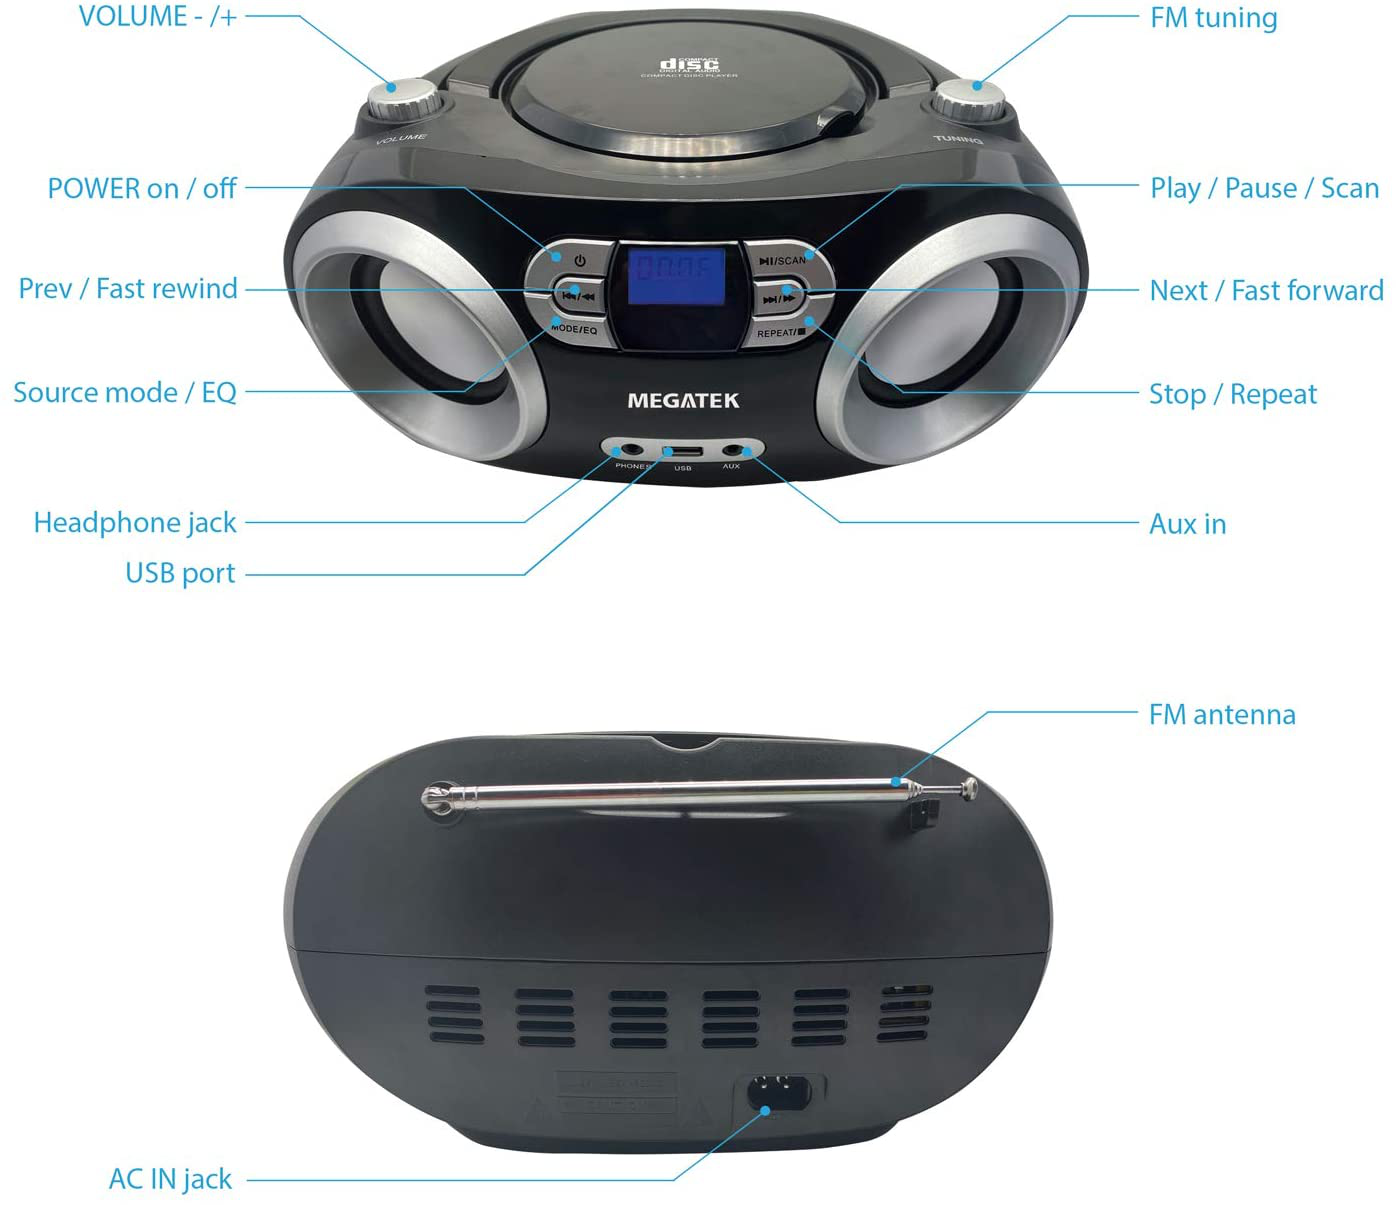 Megatek CB-M25BT Portable CD Player Boombox with FM Stereo Radio, Bluetooth Wireless & Enhanced Sound, CD-R/CD-RW/MP3/WMA Playback, USB Port, AUX Input, Headphone Jack, LCD Display, AC/Battery Powered